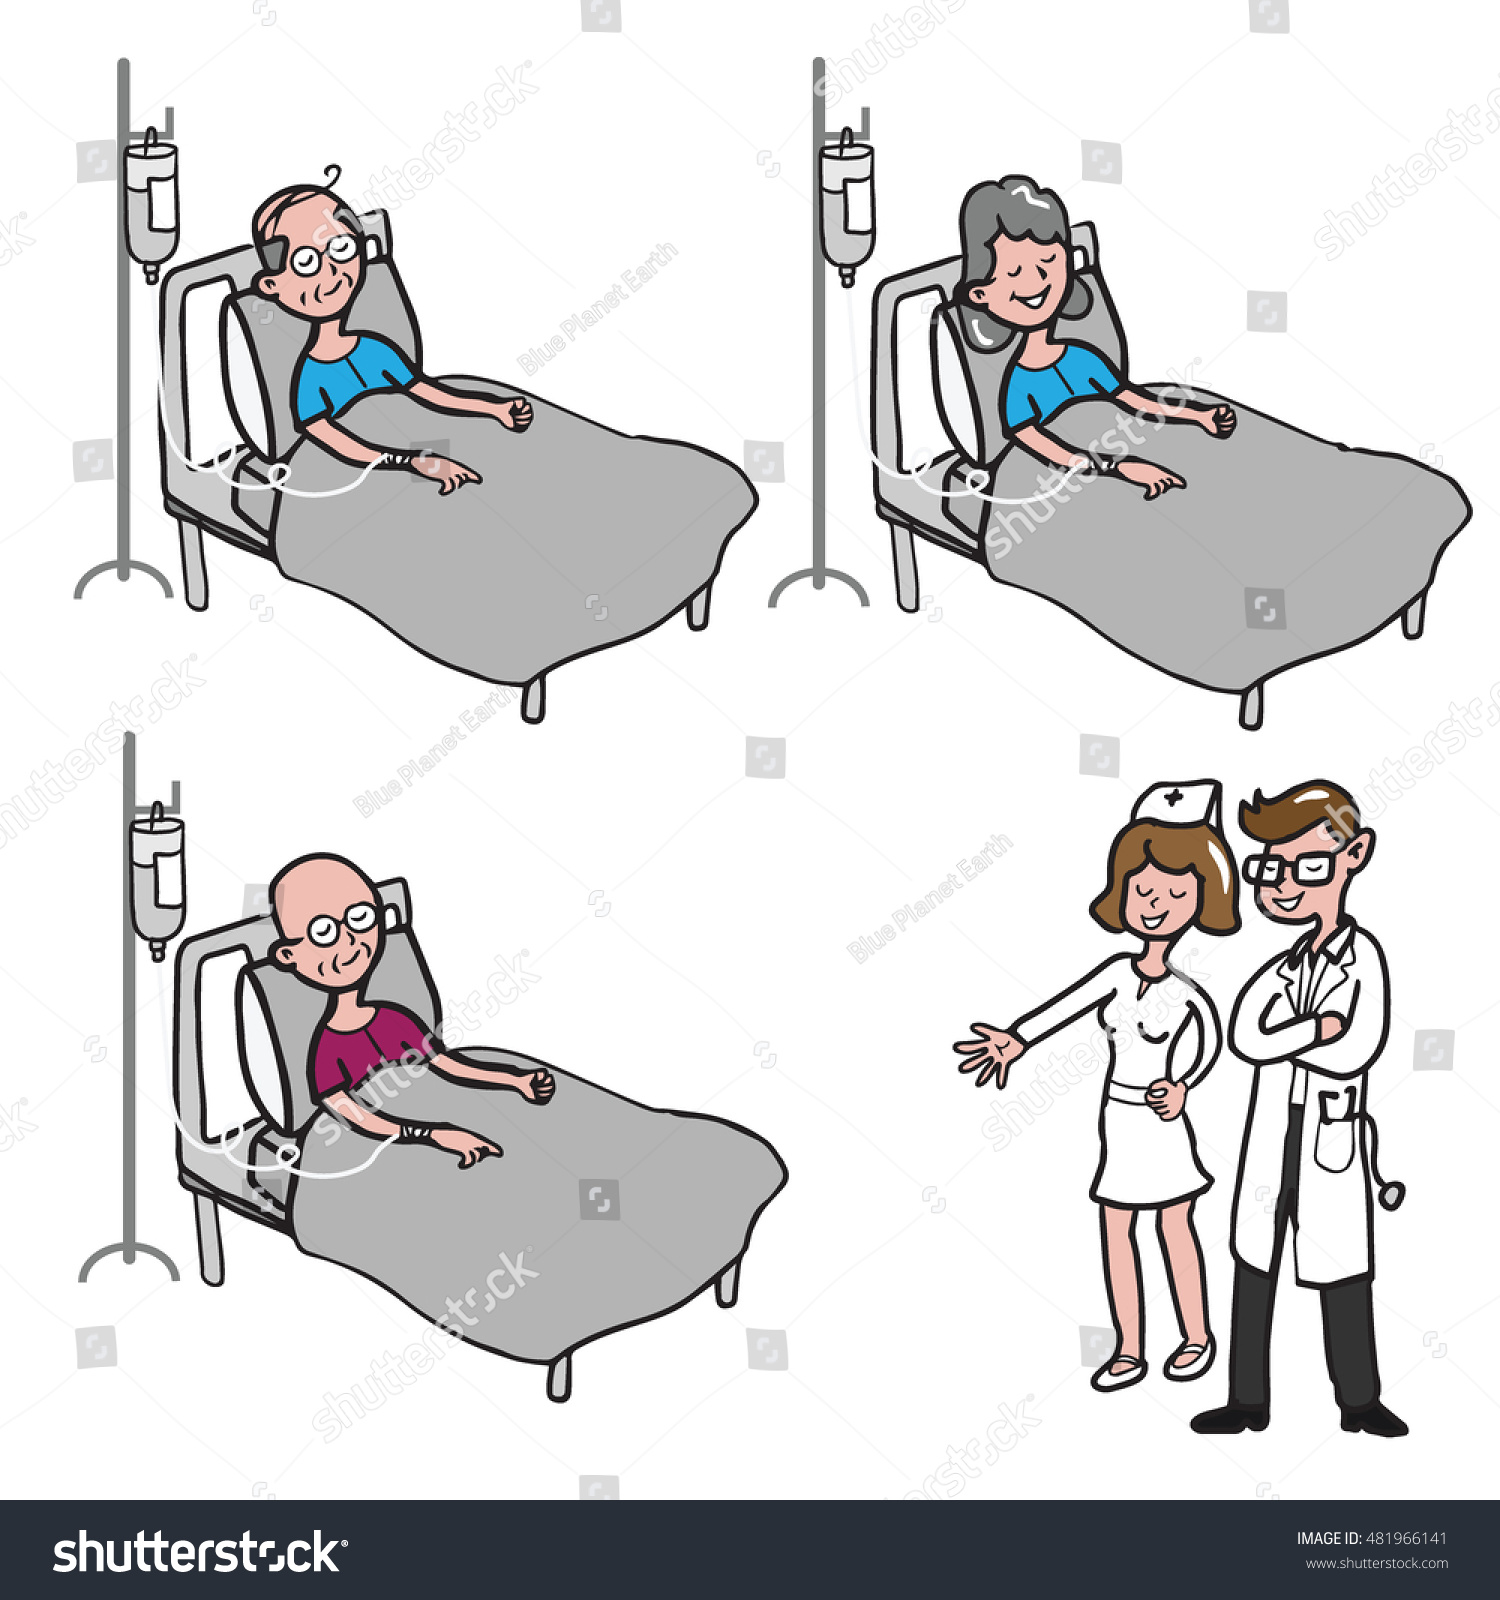 Doctor And Nurse Visit Patients On Ward Cartoon Royalty Free Stock Vector 481966141 0173